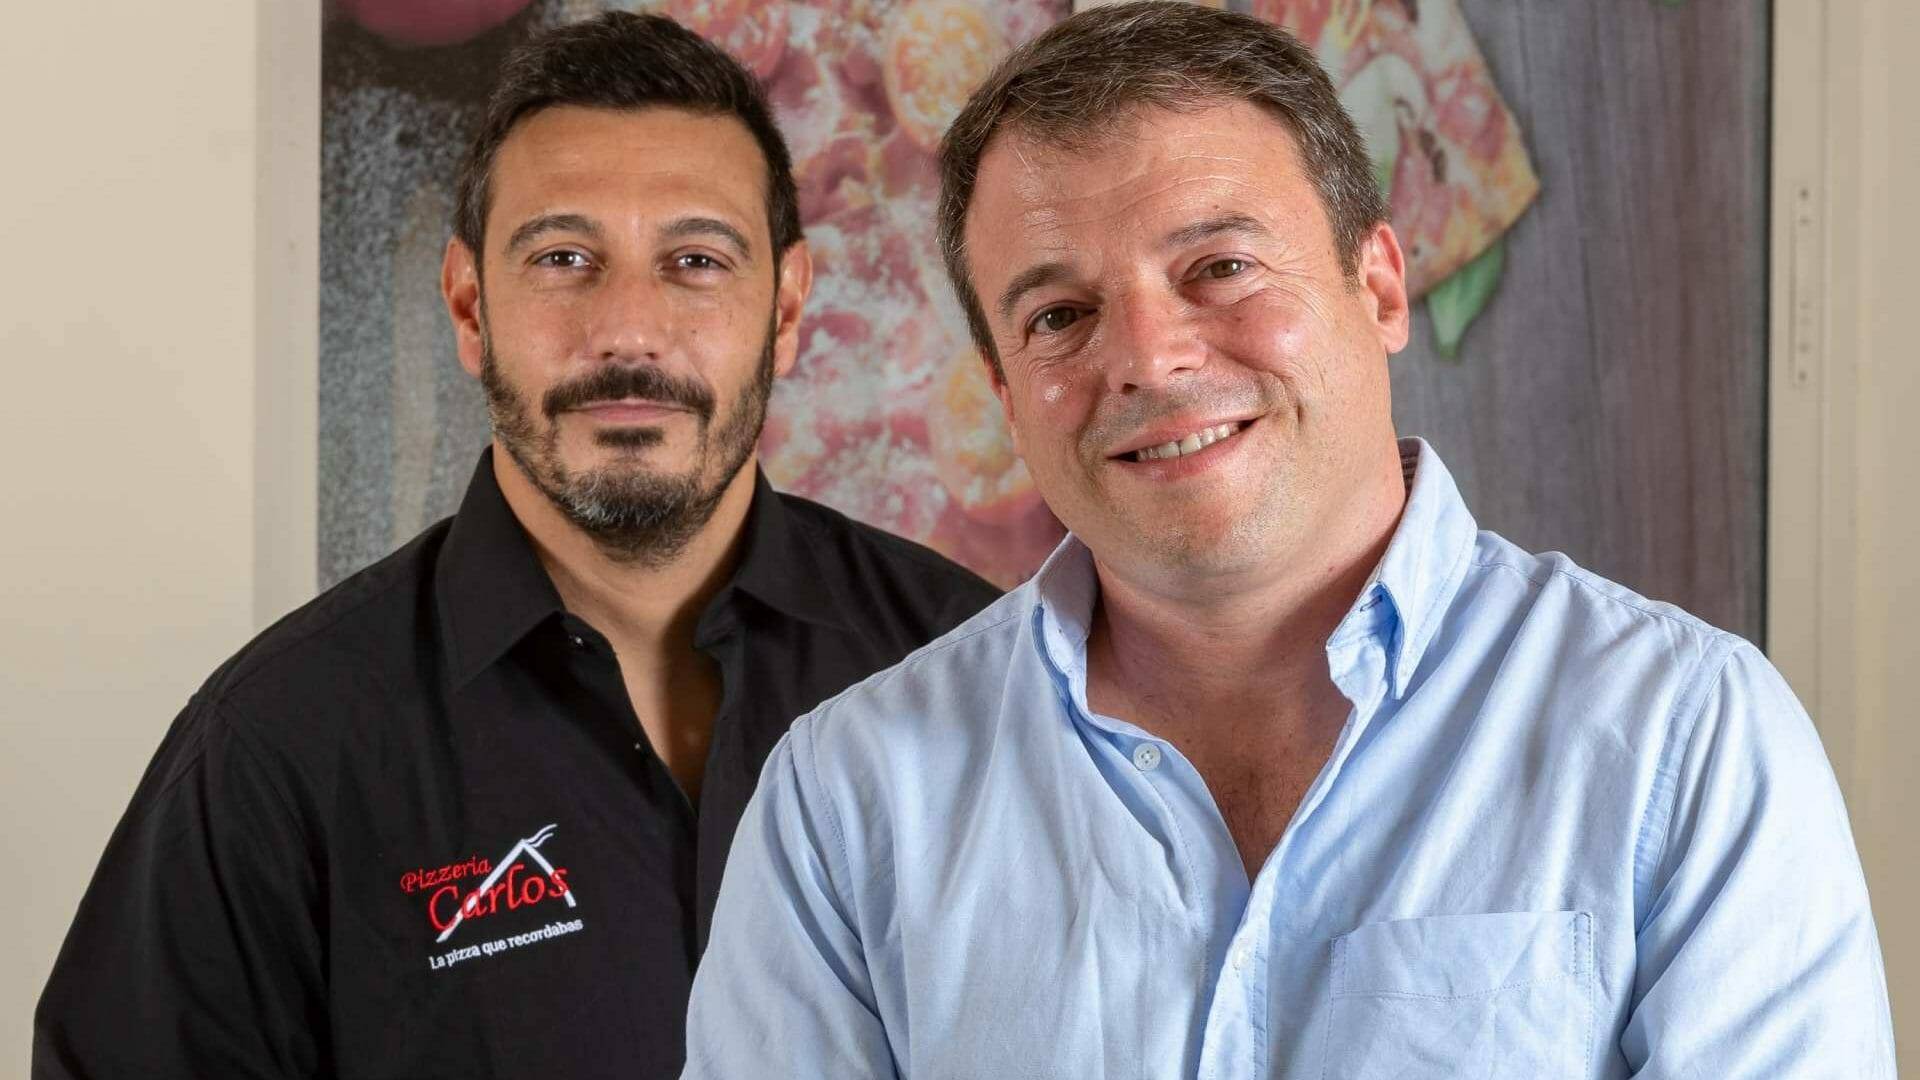 Xavi Crespo y Francesc Ros, socios de Pizzerías Carlos